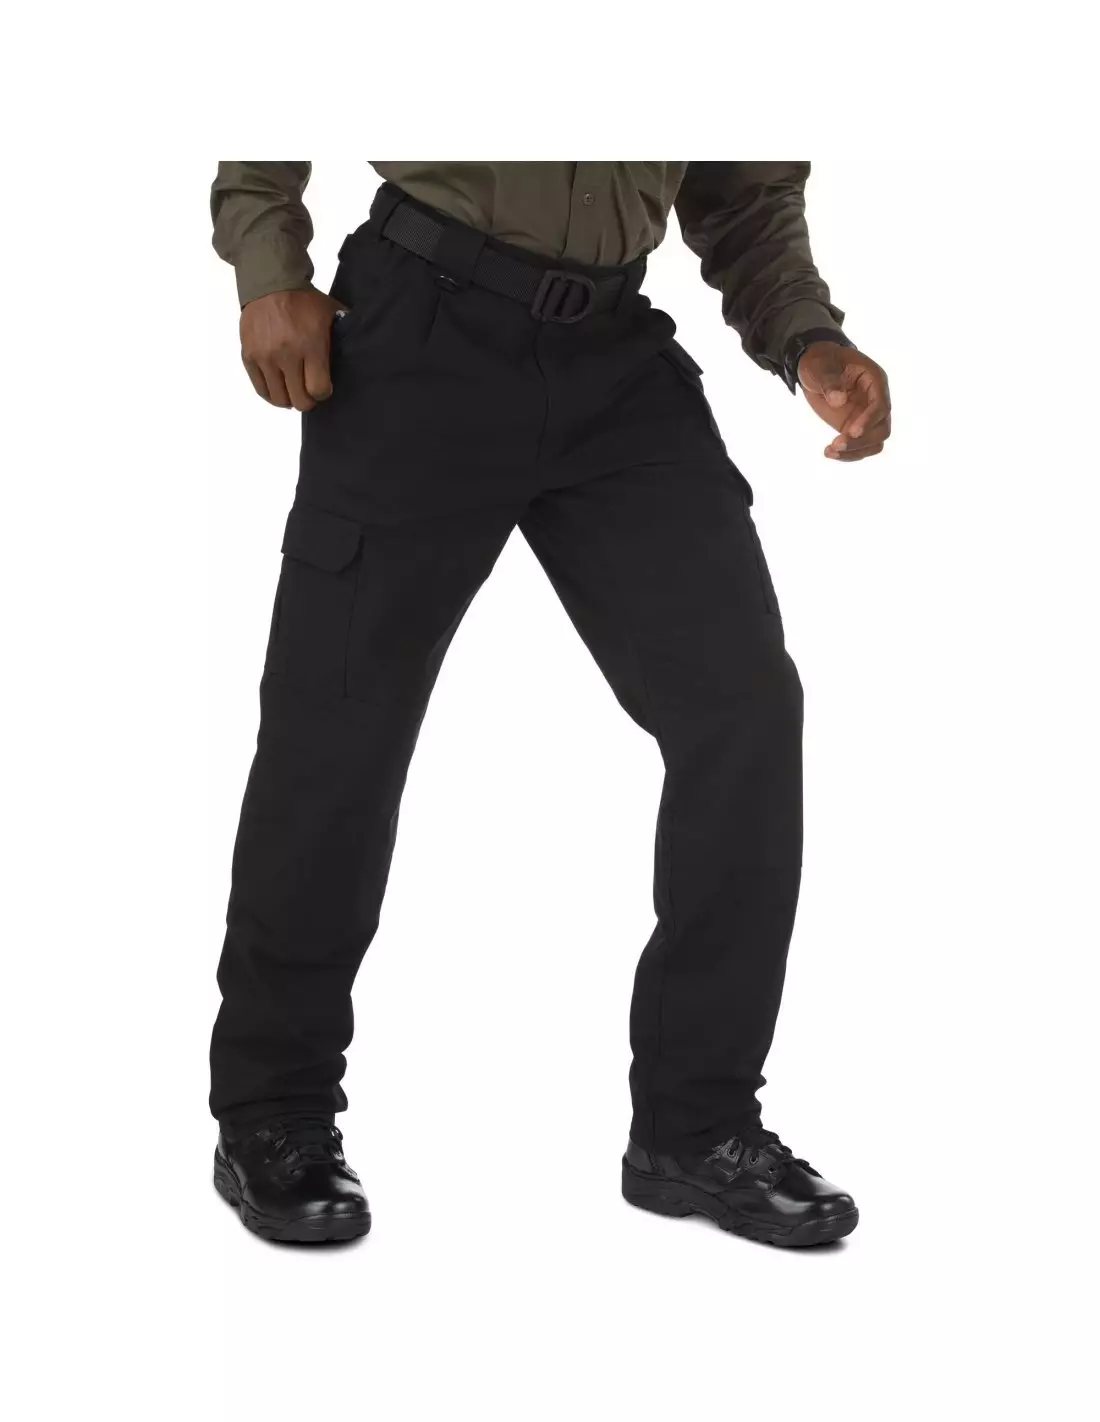 5.11, Inc. Tactical Trousers / Pants - Black